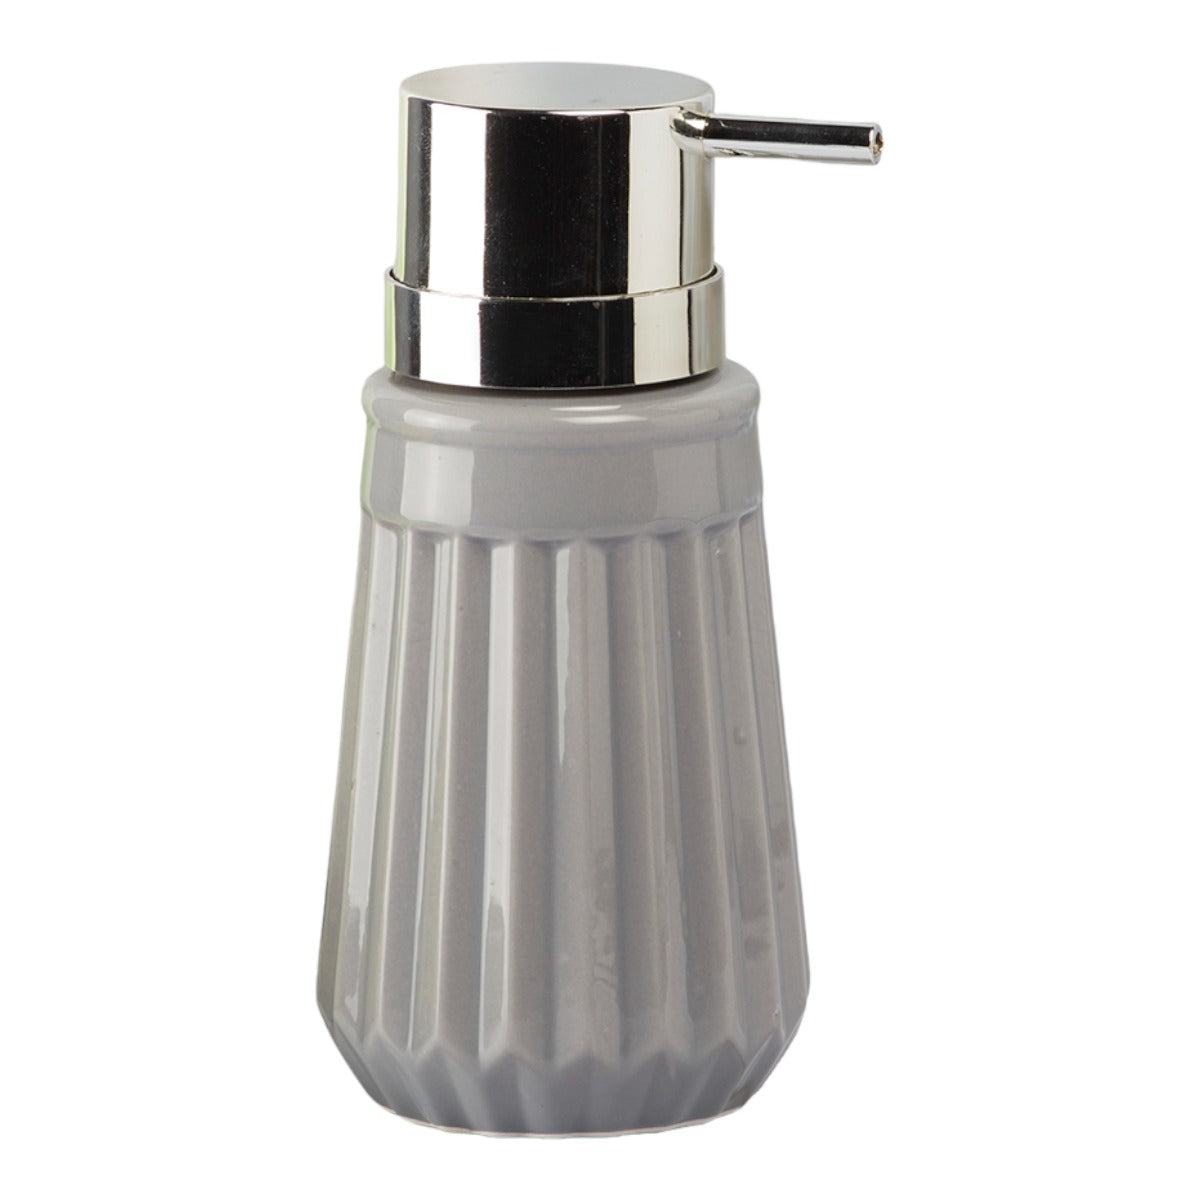 Ceramic Soap Dispenser Pump for Bathroom for Bath Gel, Lotion, Shampoo (6034)